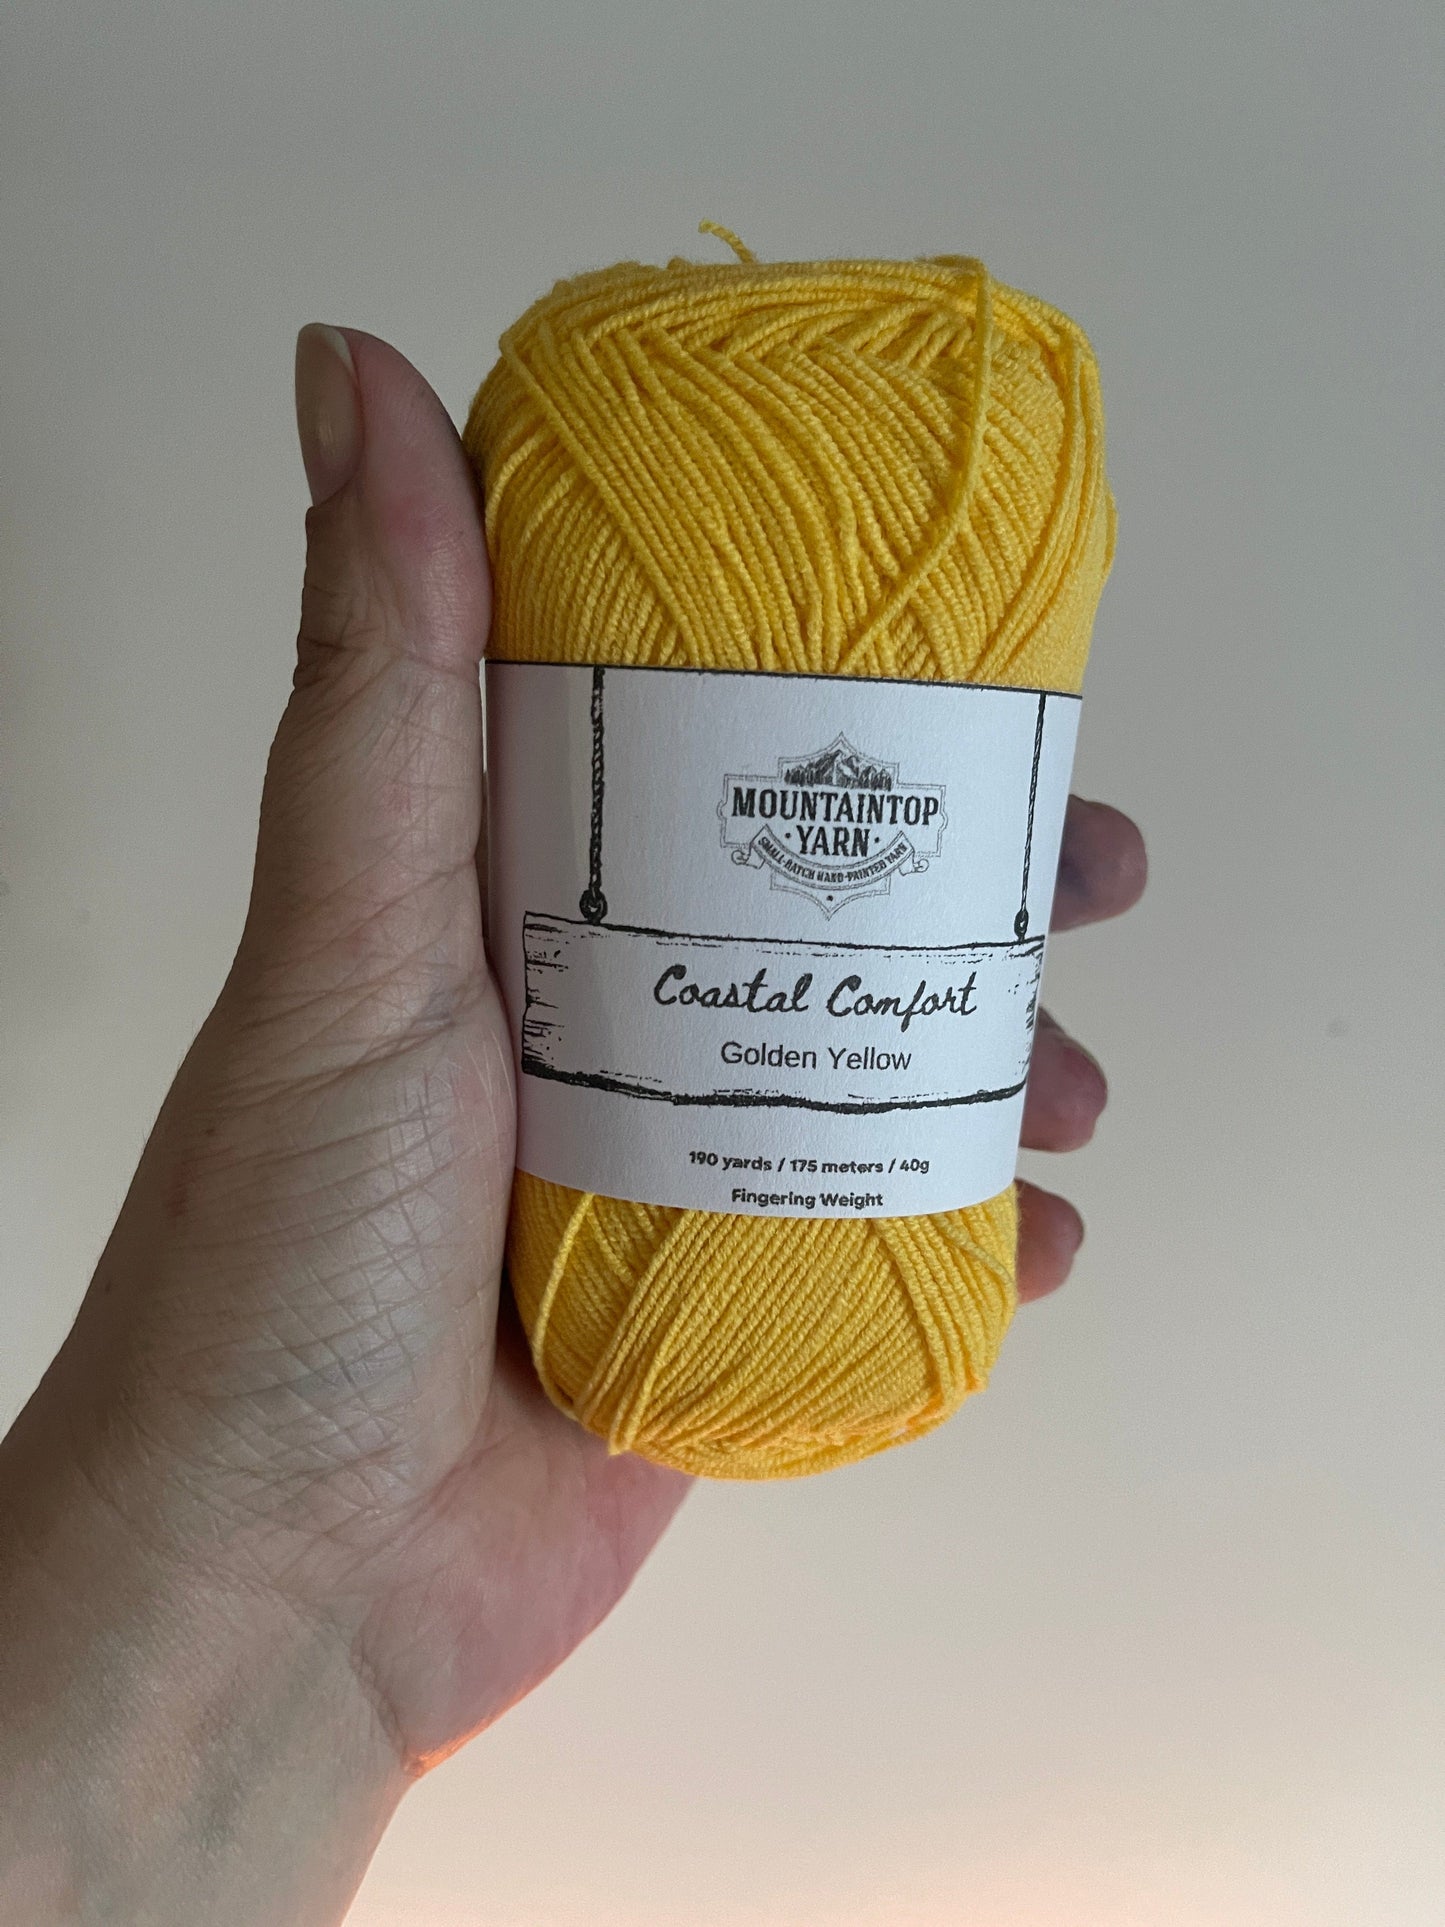 Mountaintop Yarn Golden Yellow Coastal Comfort - Cotton and Acrylic Blend Yarn Yarn